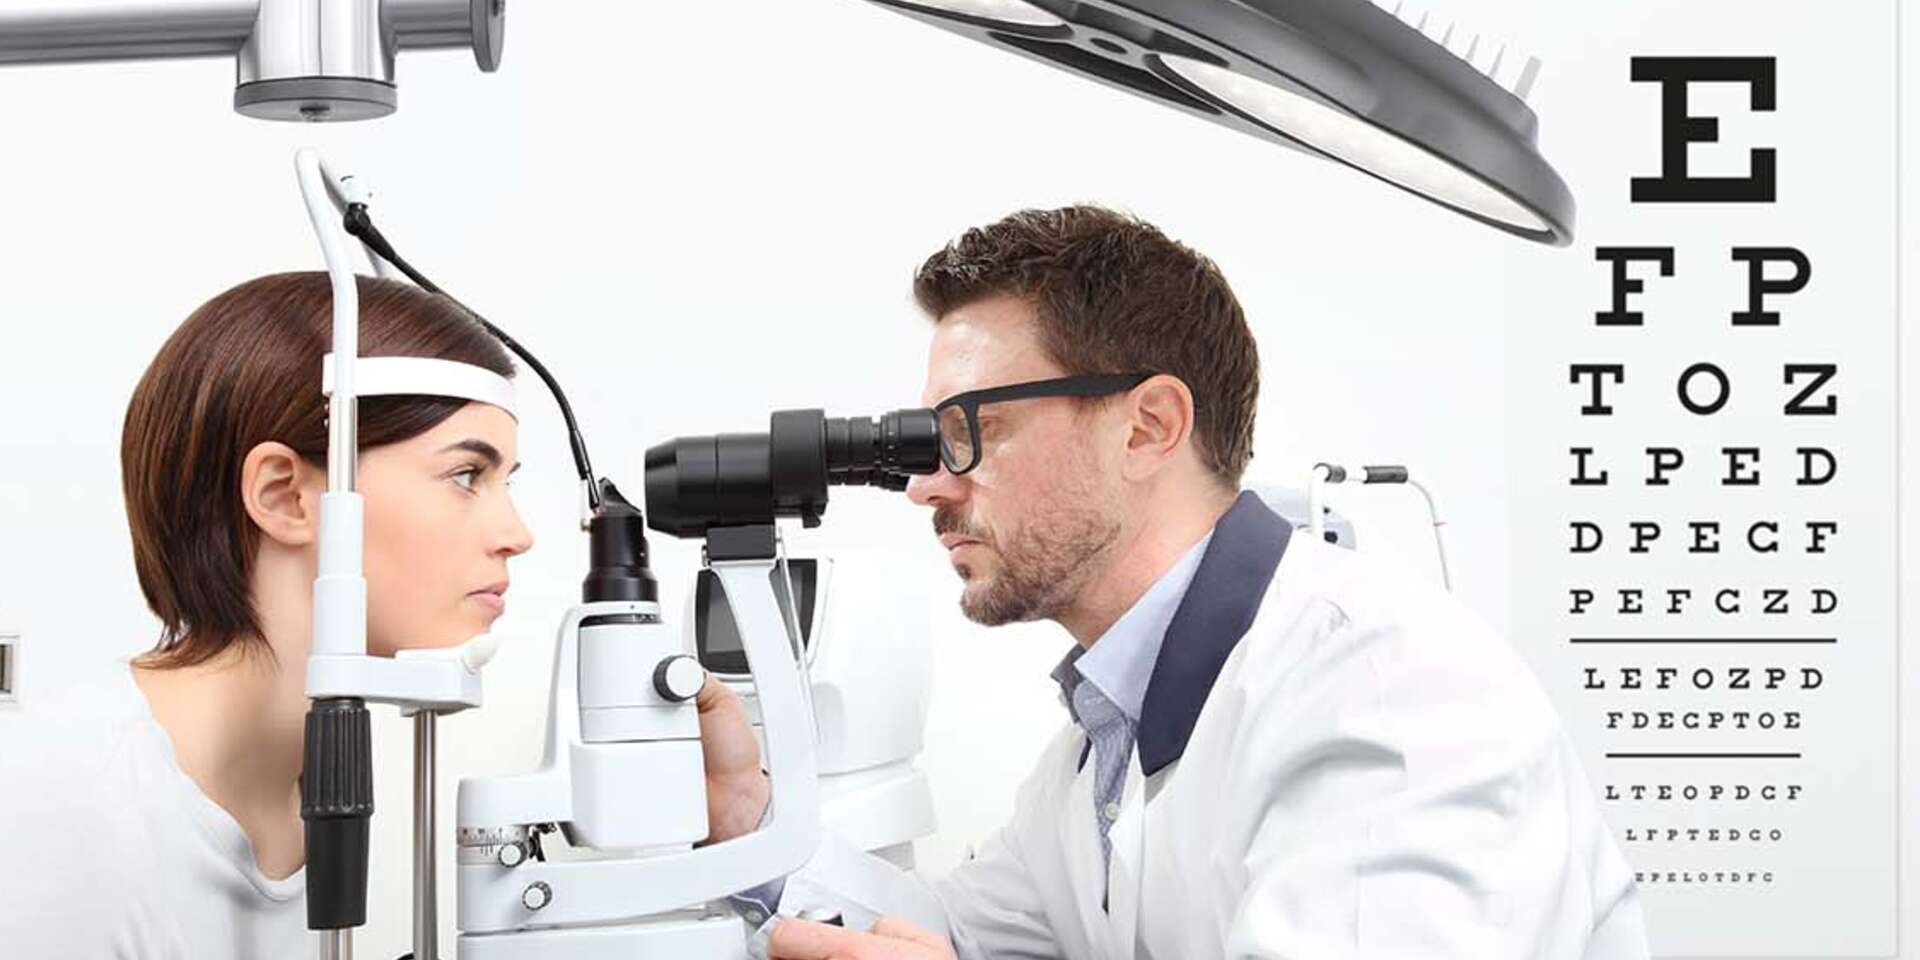 Врач зрение очки. Оптик-оптометрист. Обследование зрения. Оптометрист в оптику. Оптика в медицине.